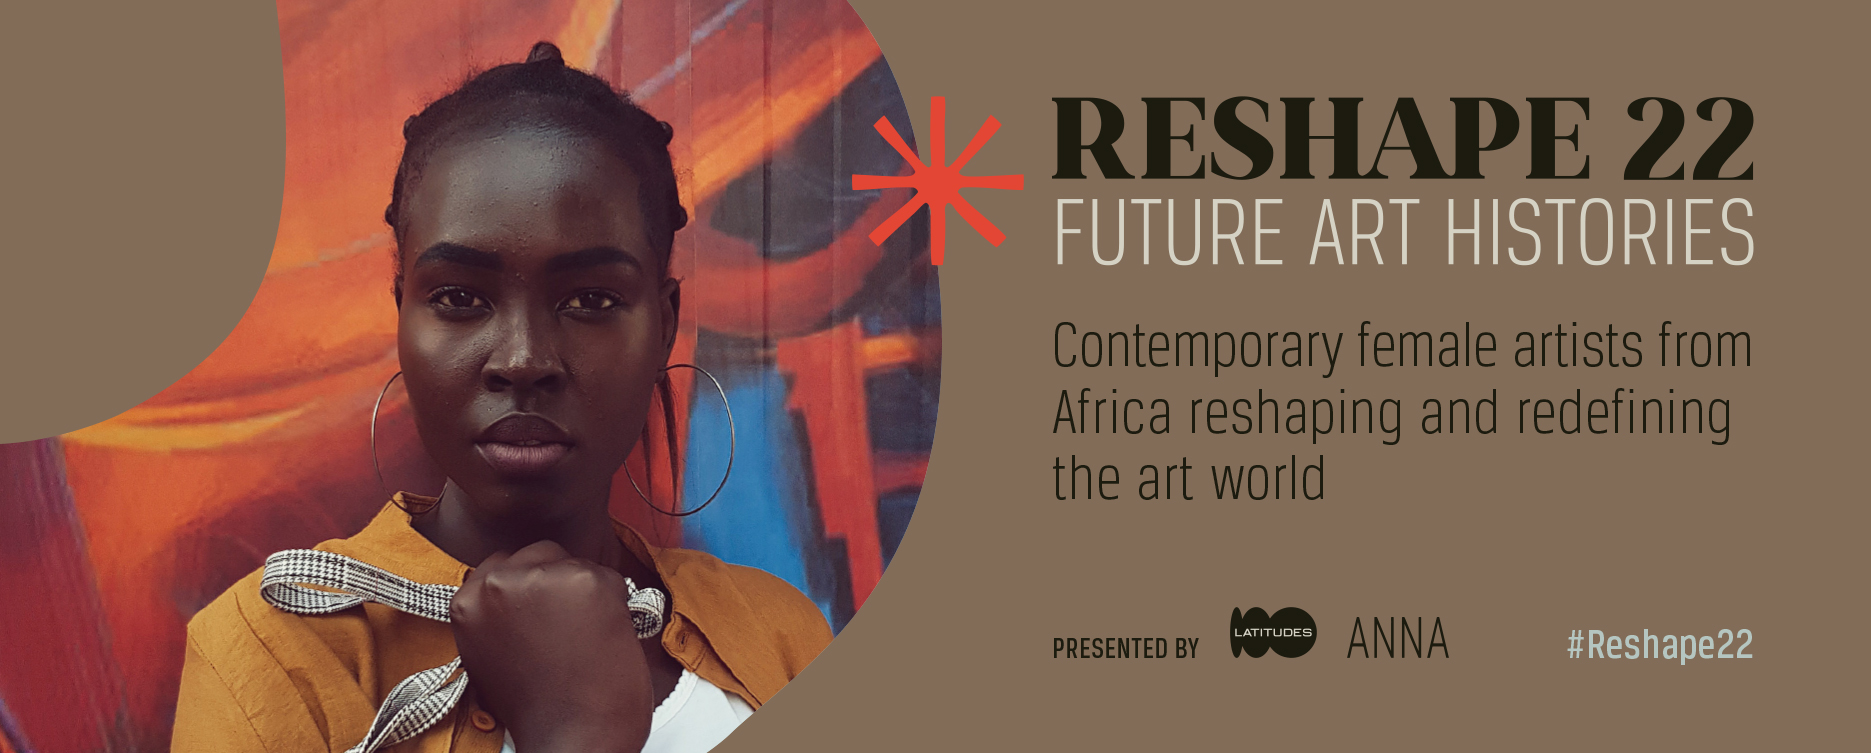 Reshape 22 | Future Art Histories